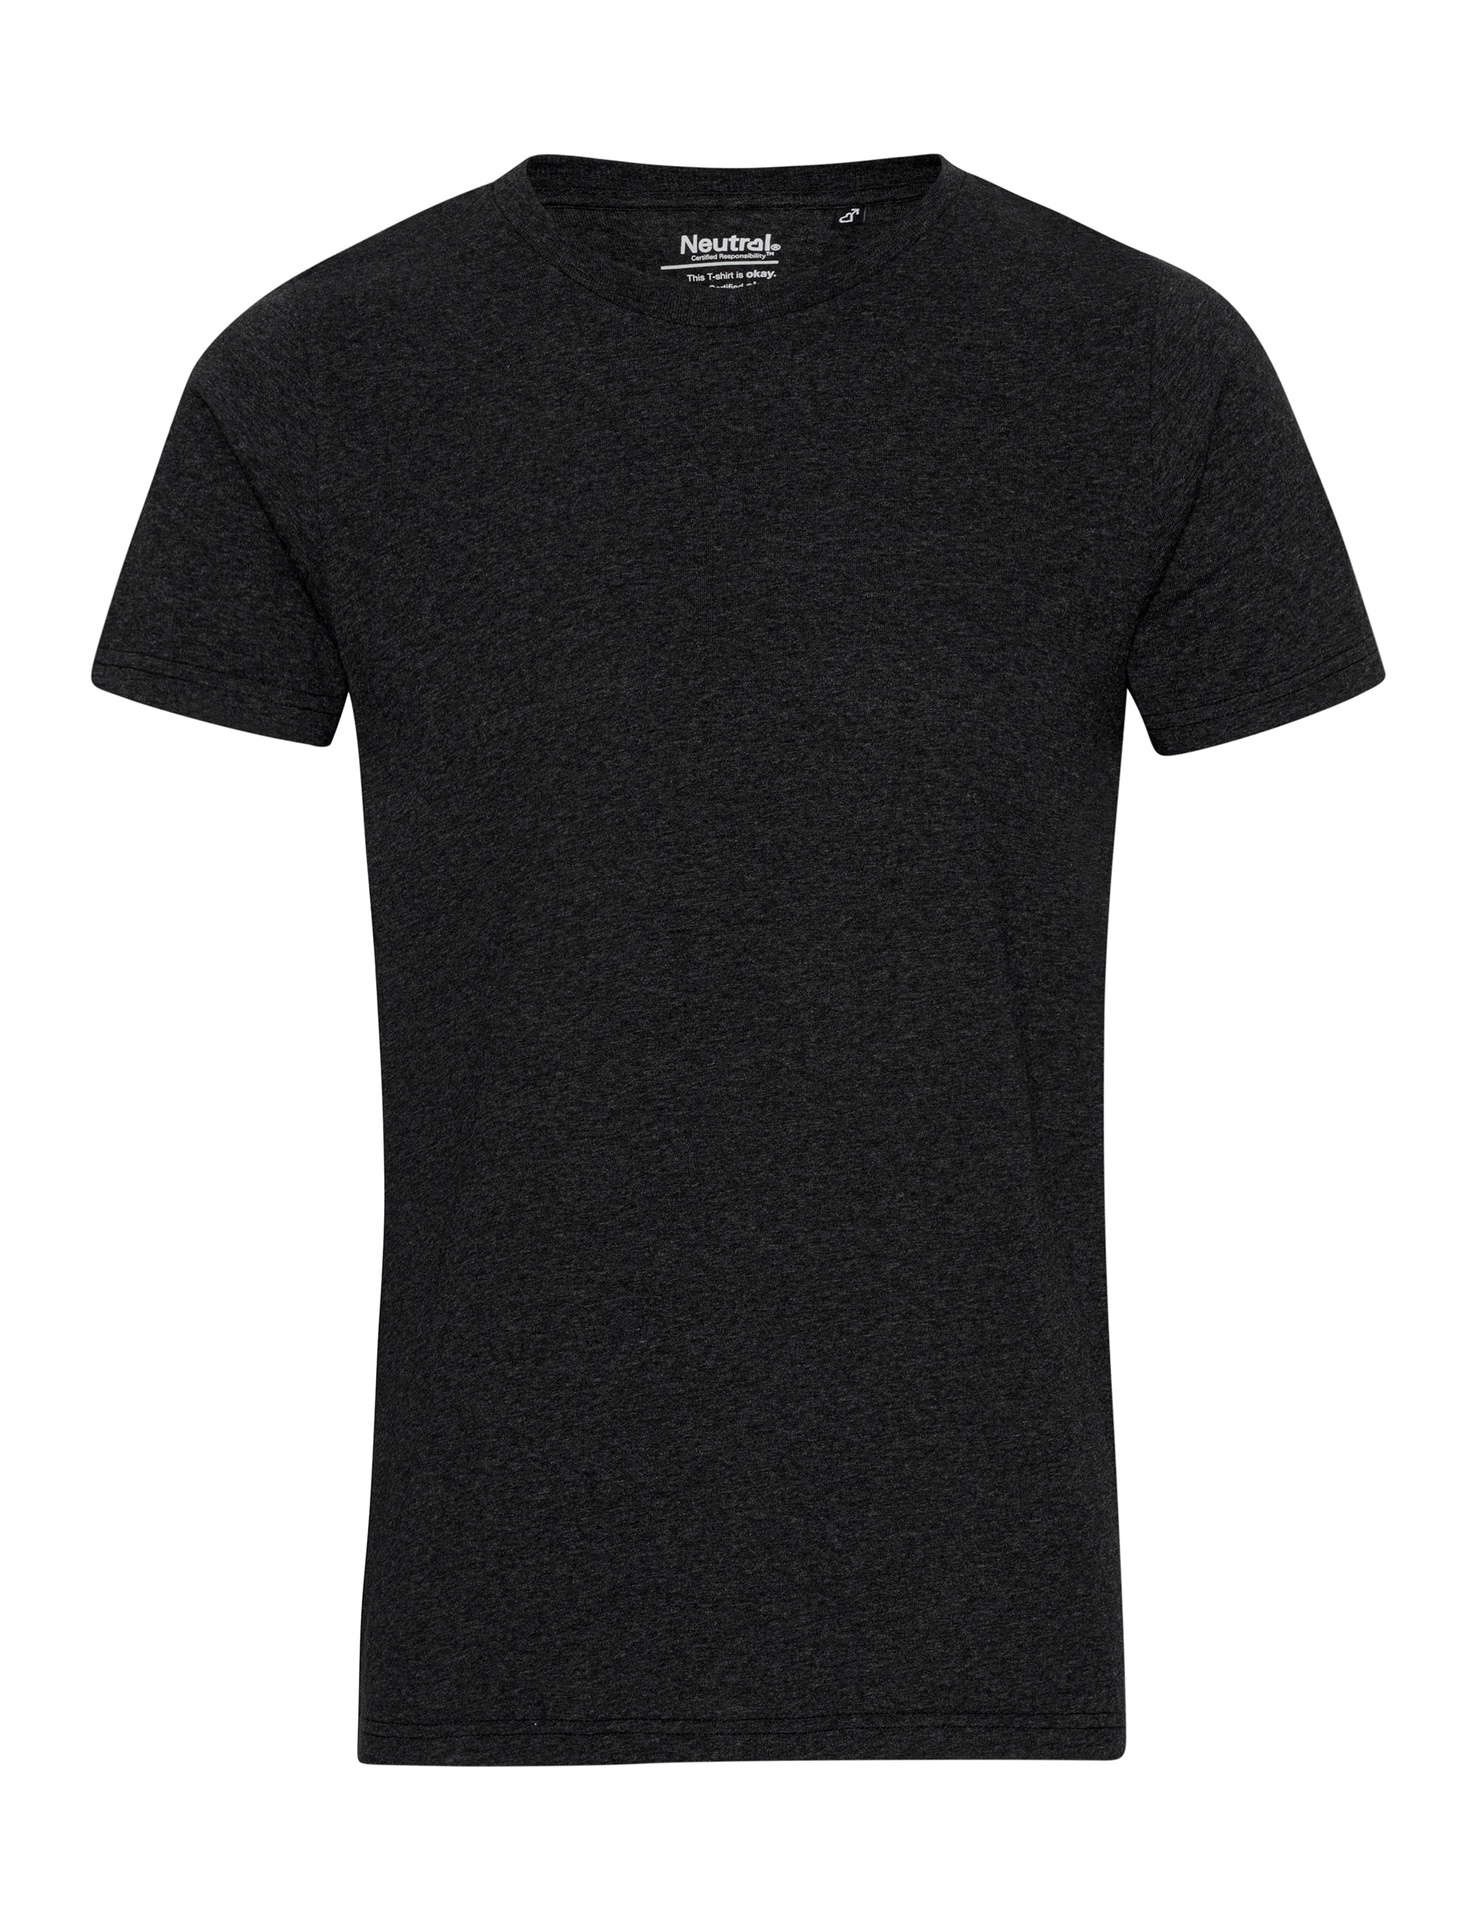 [PR/01027] Recycled Cotton T-Shirt (Black Melange 02, S)